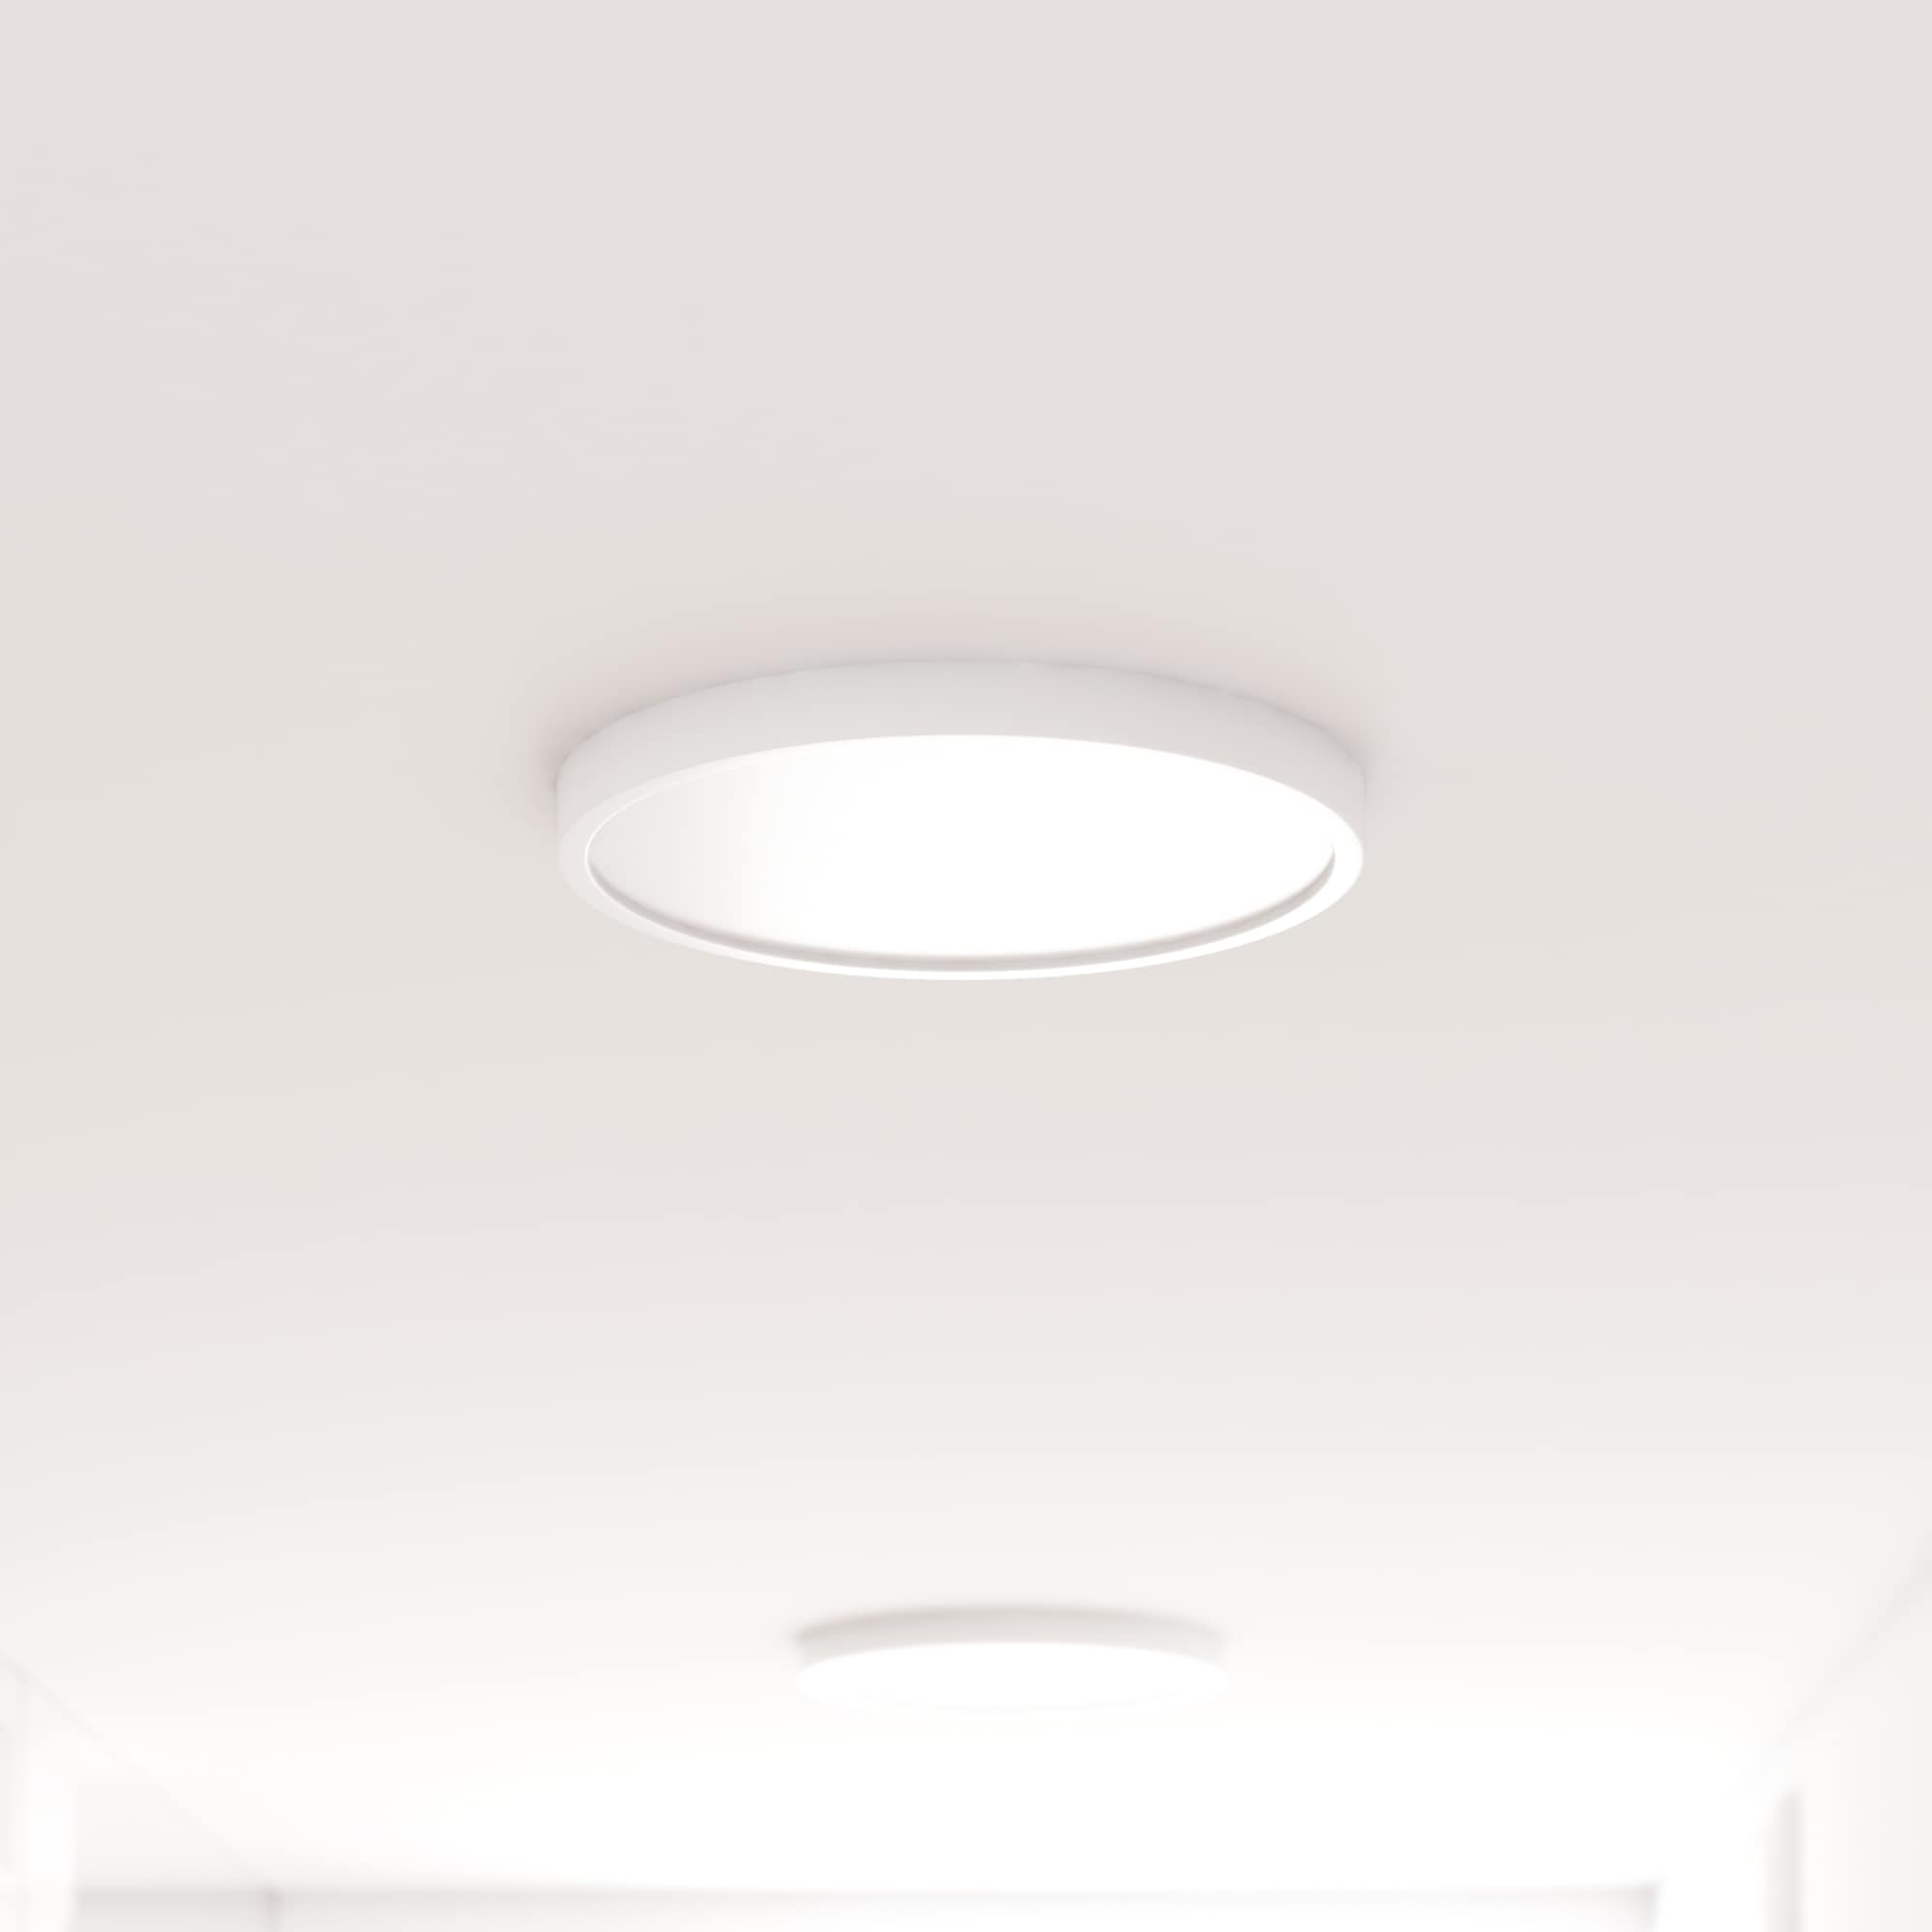 LED Profile For Plasterboard Ceiling Lighting For Sale